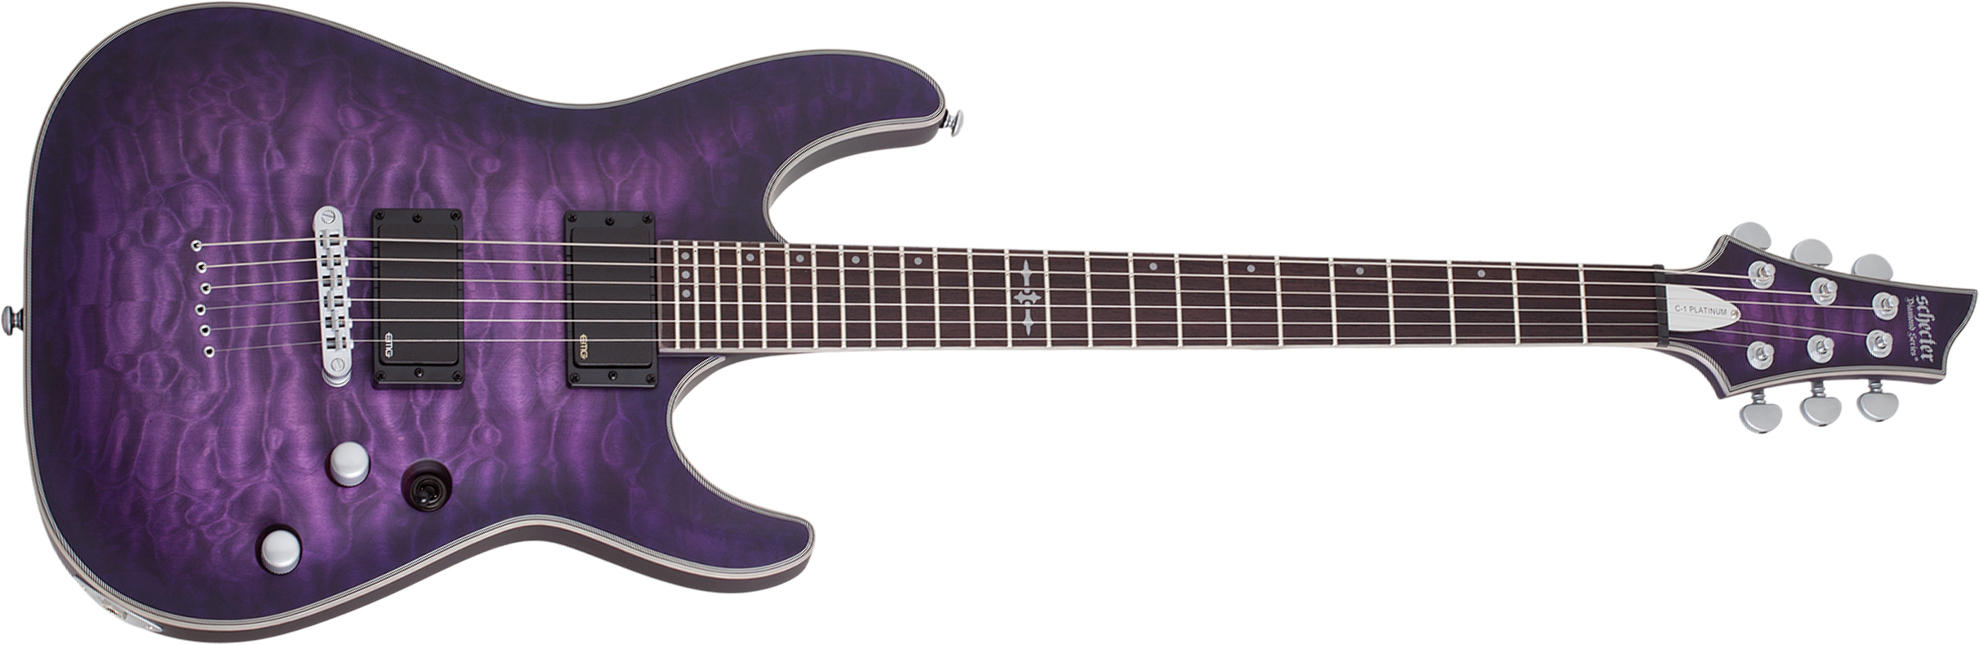 Schecter C-1 Platinum 2h Emg Ht Eb - Satin Purple Burst - Guitarra eléctrica con forma de str. - Main picture